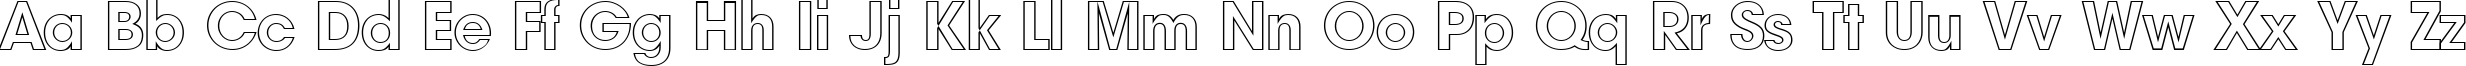 Пример написания английского алфавита шрифтом a_AvanteOtl Heavy